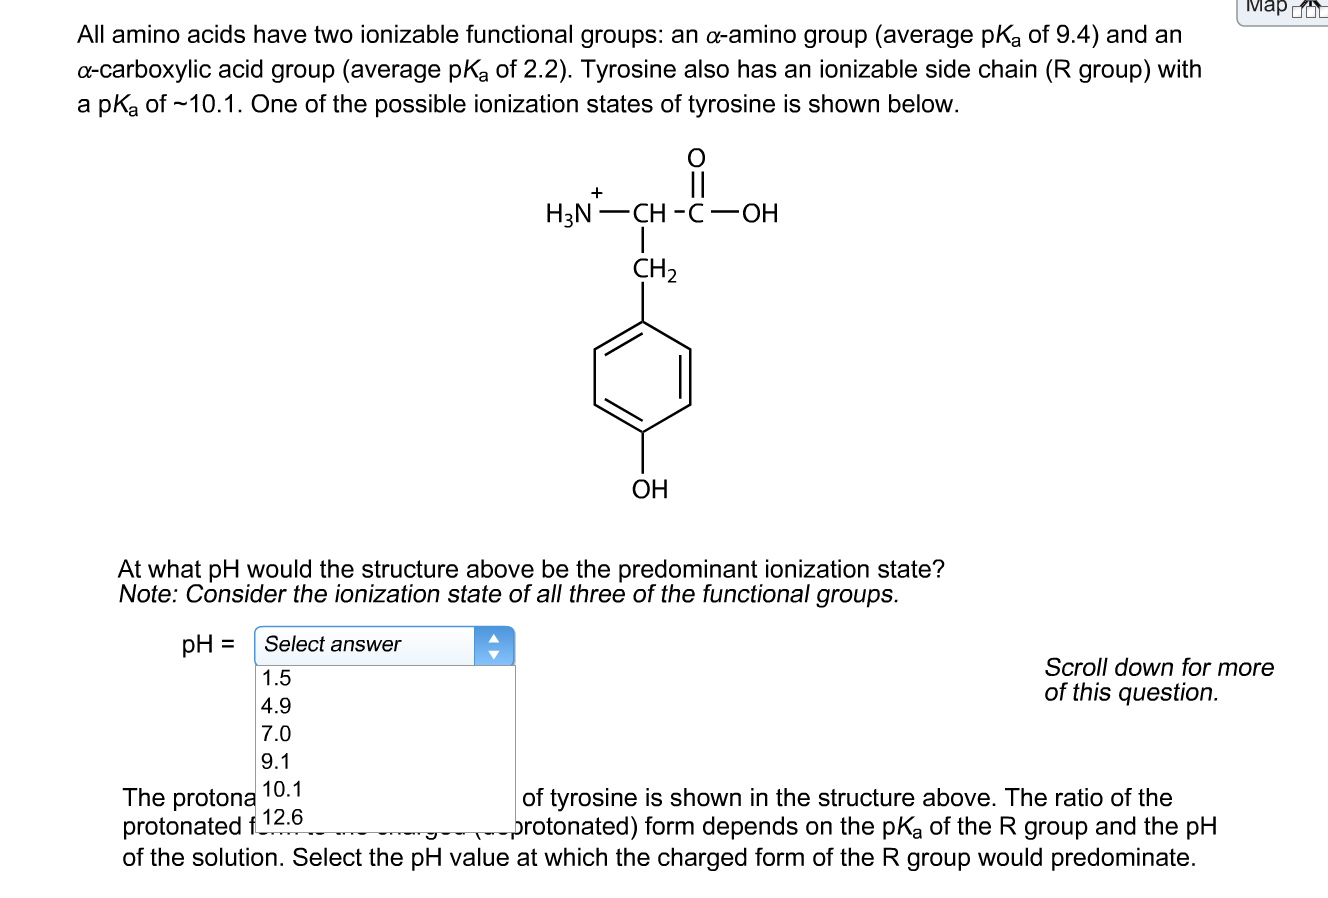 amino functional group